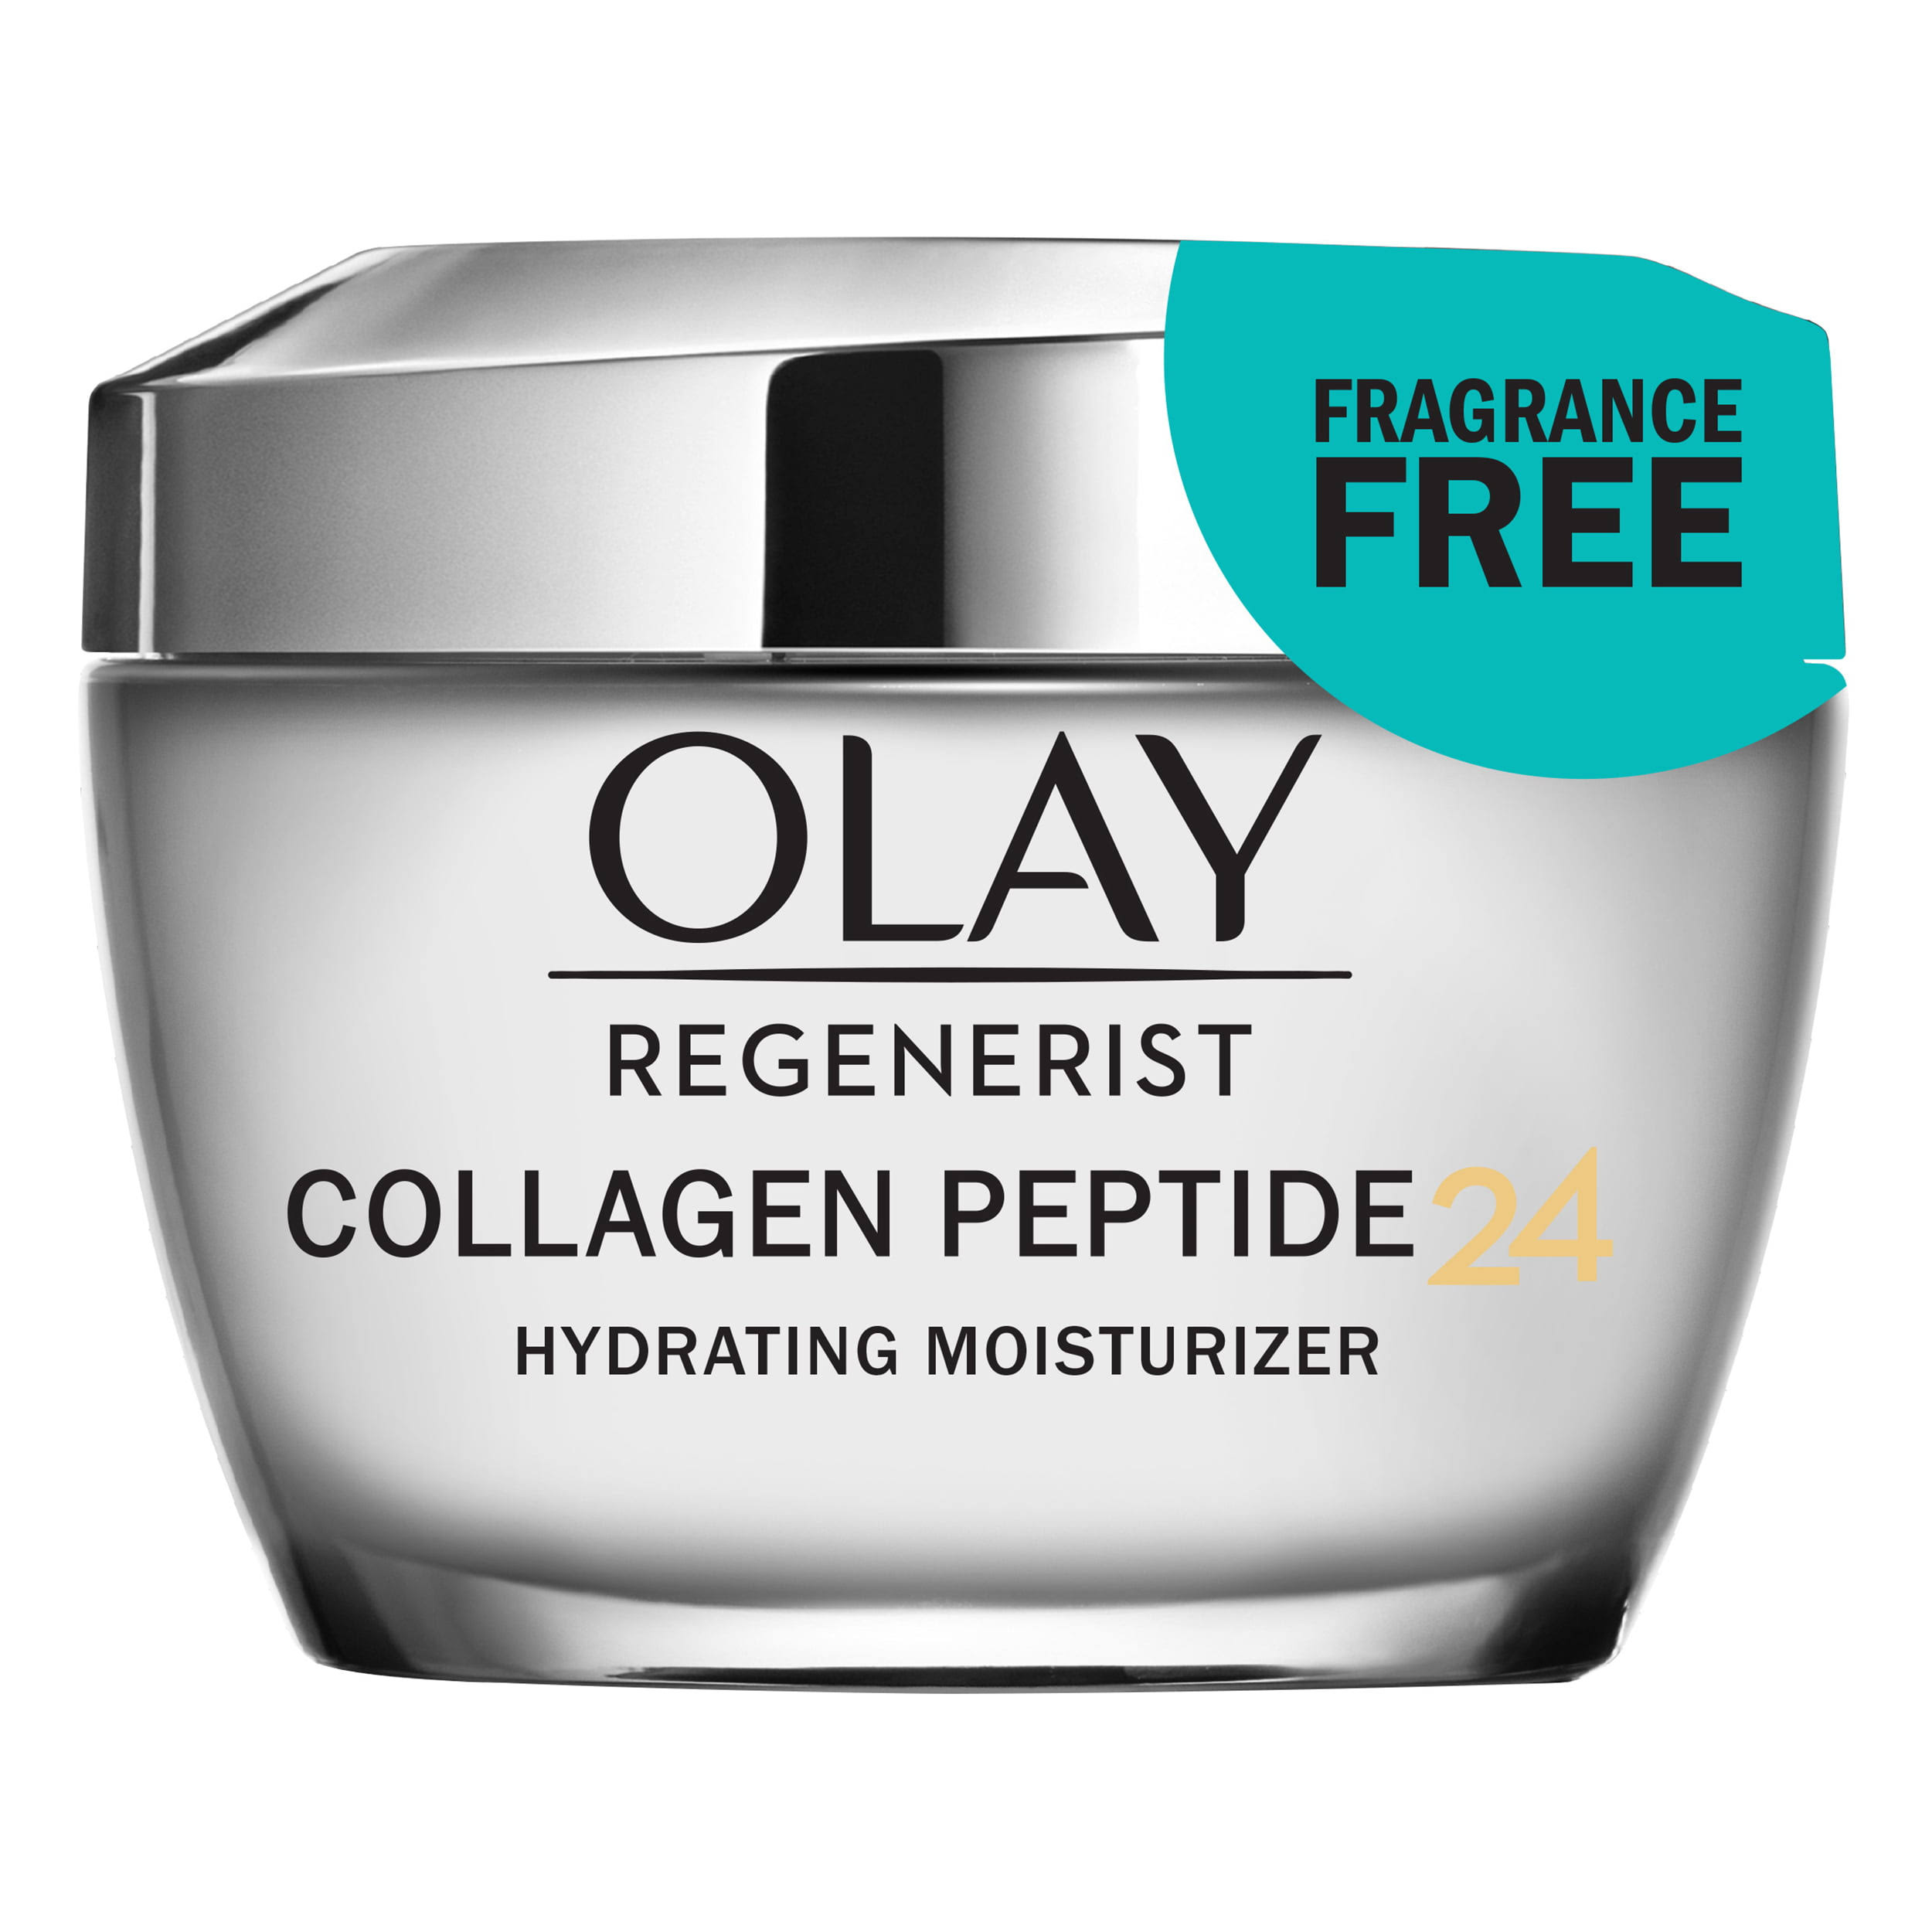 Olay Regenerist Collagen Peptide 24 Face Moisturizer, Fragrance-Free